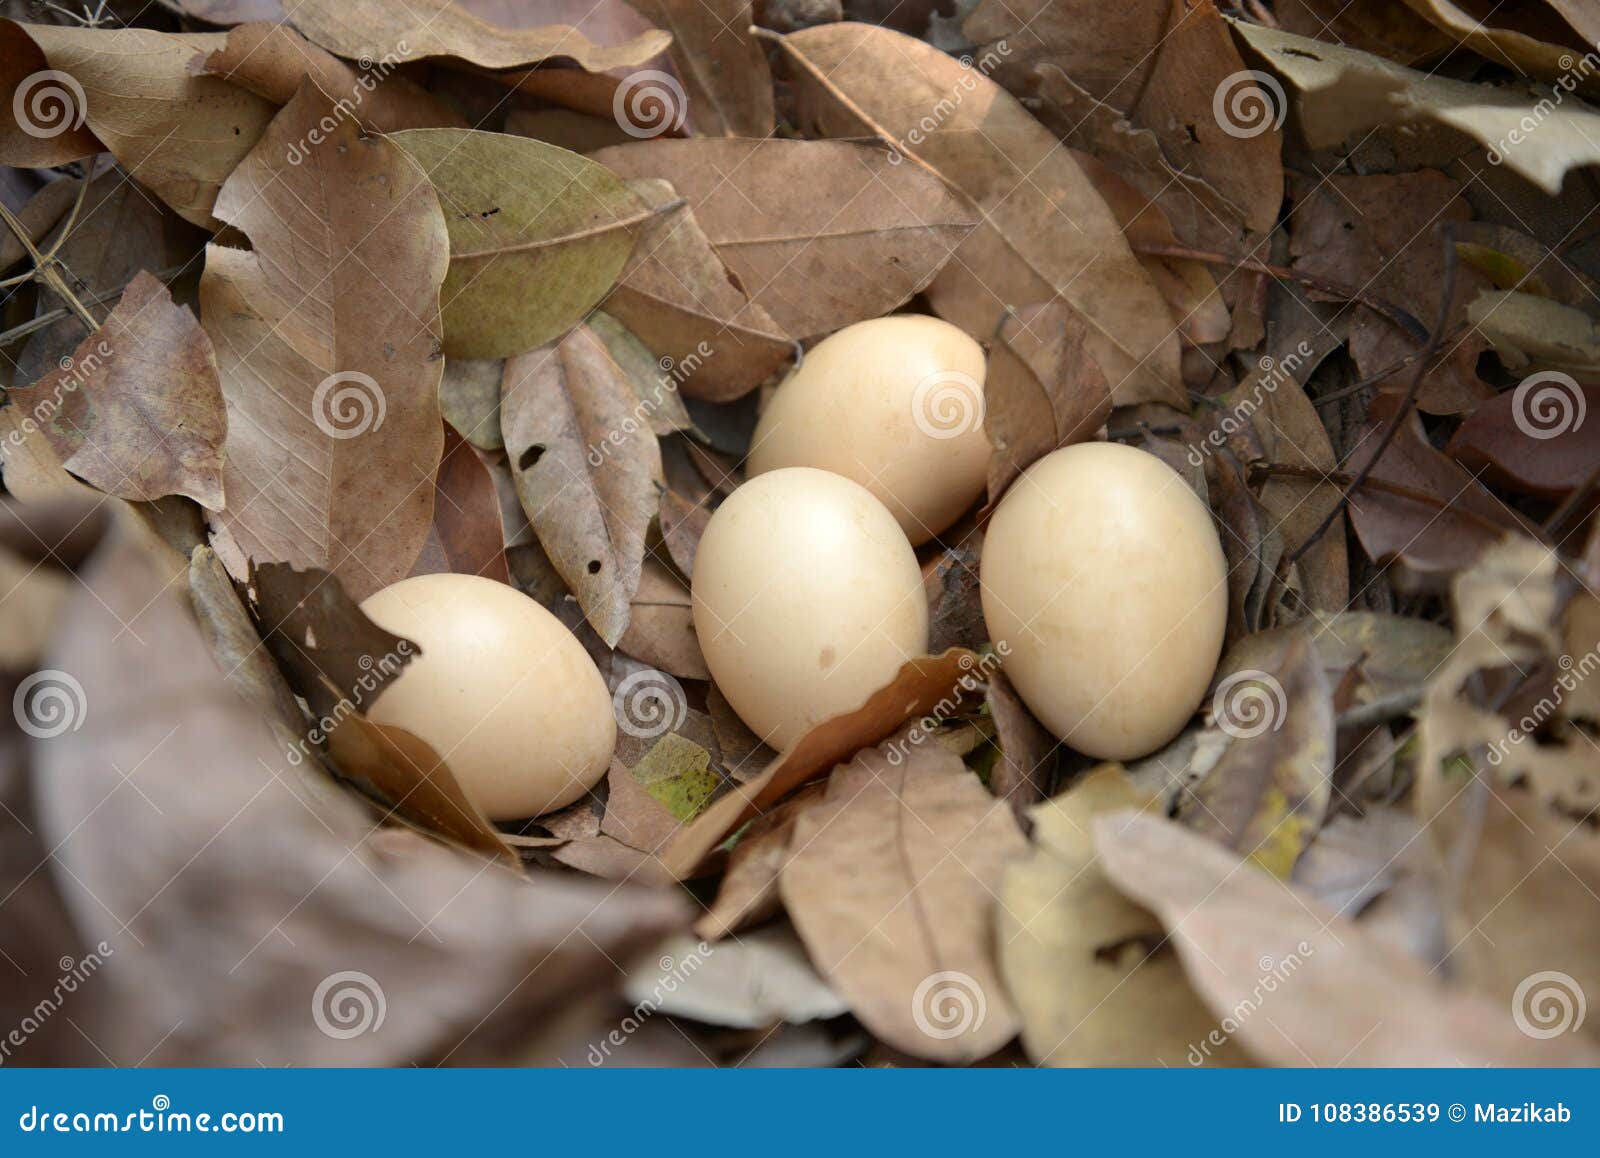 red-junglefowl-egg-four-red-junglefowl-eggs-net-made-leaf-108386539.jpg